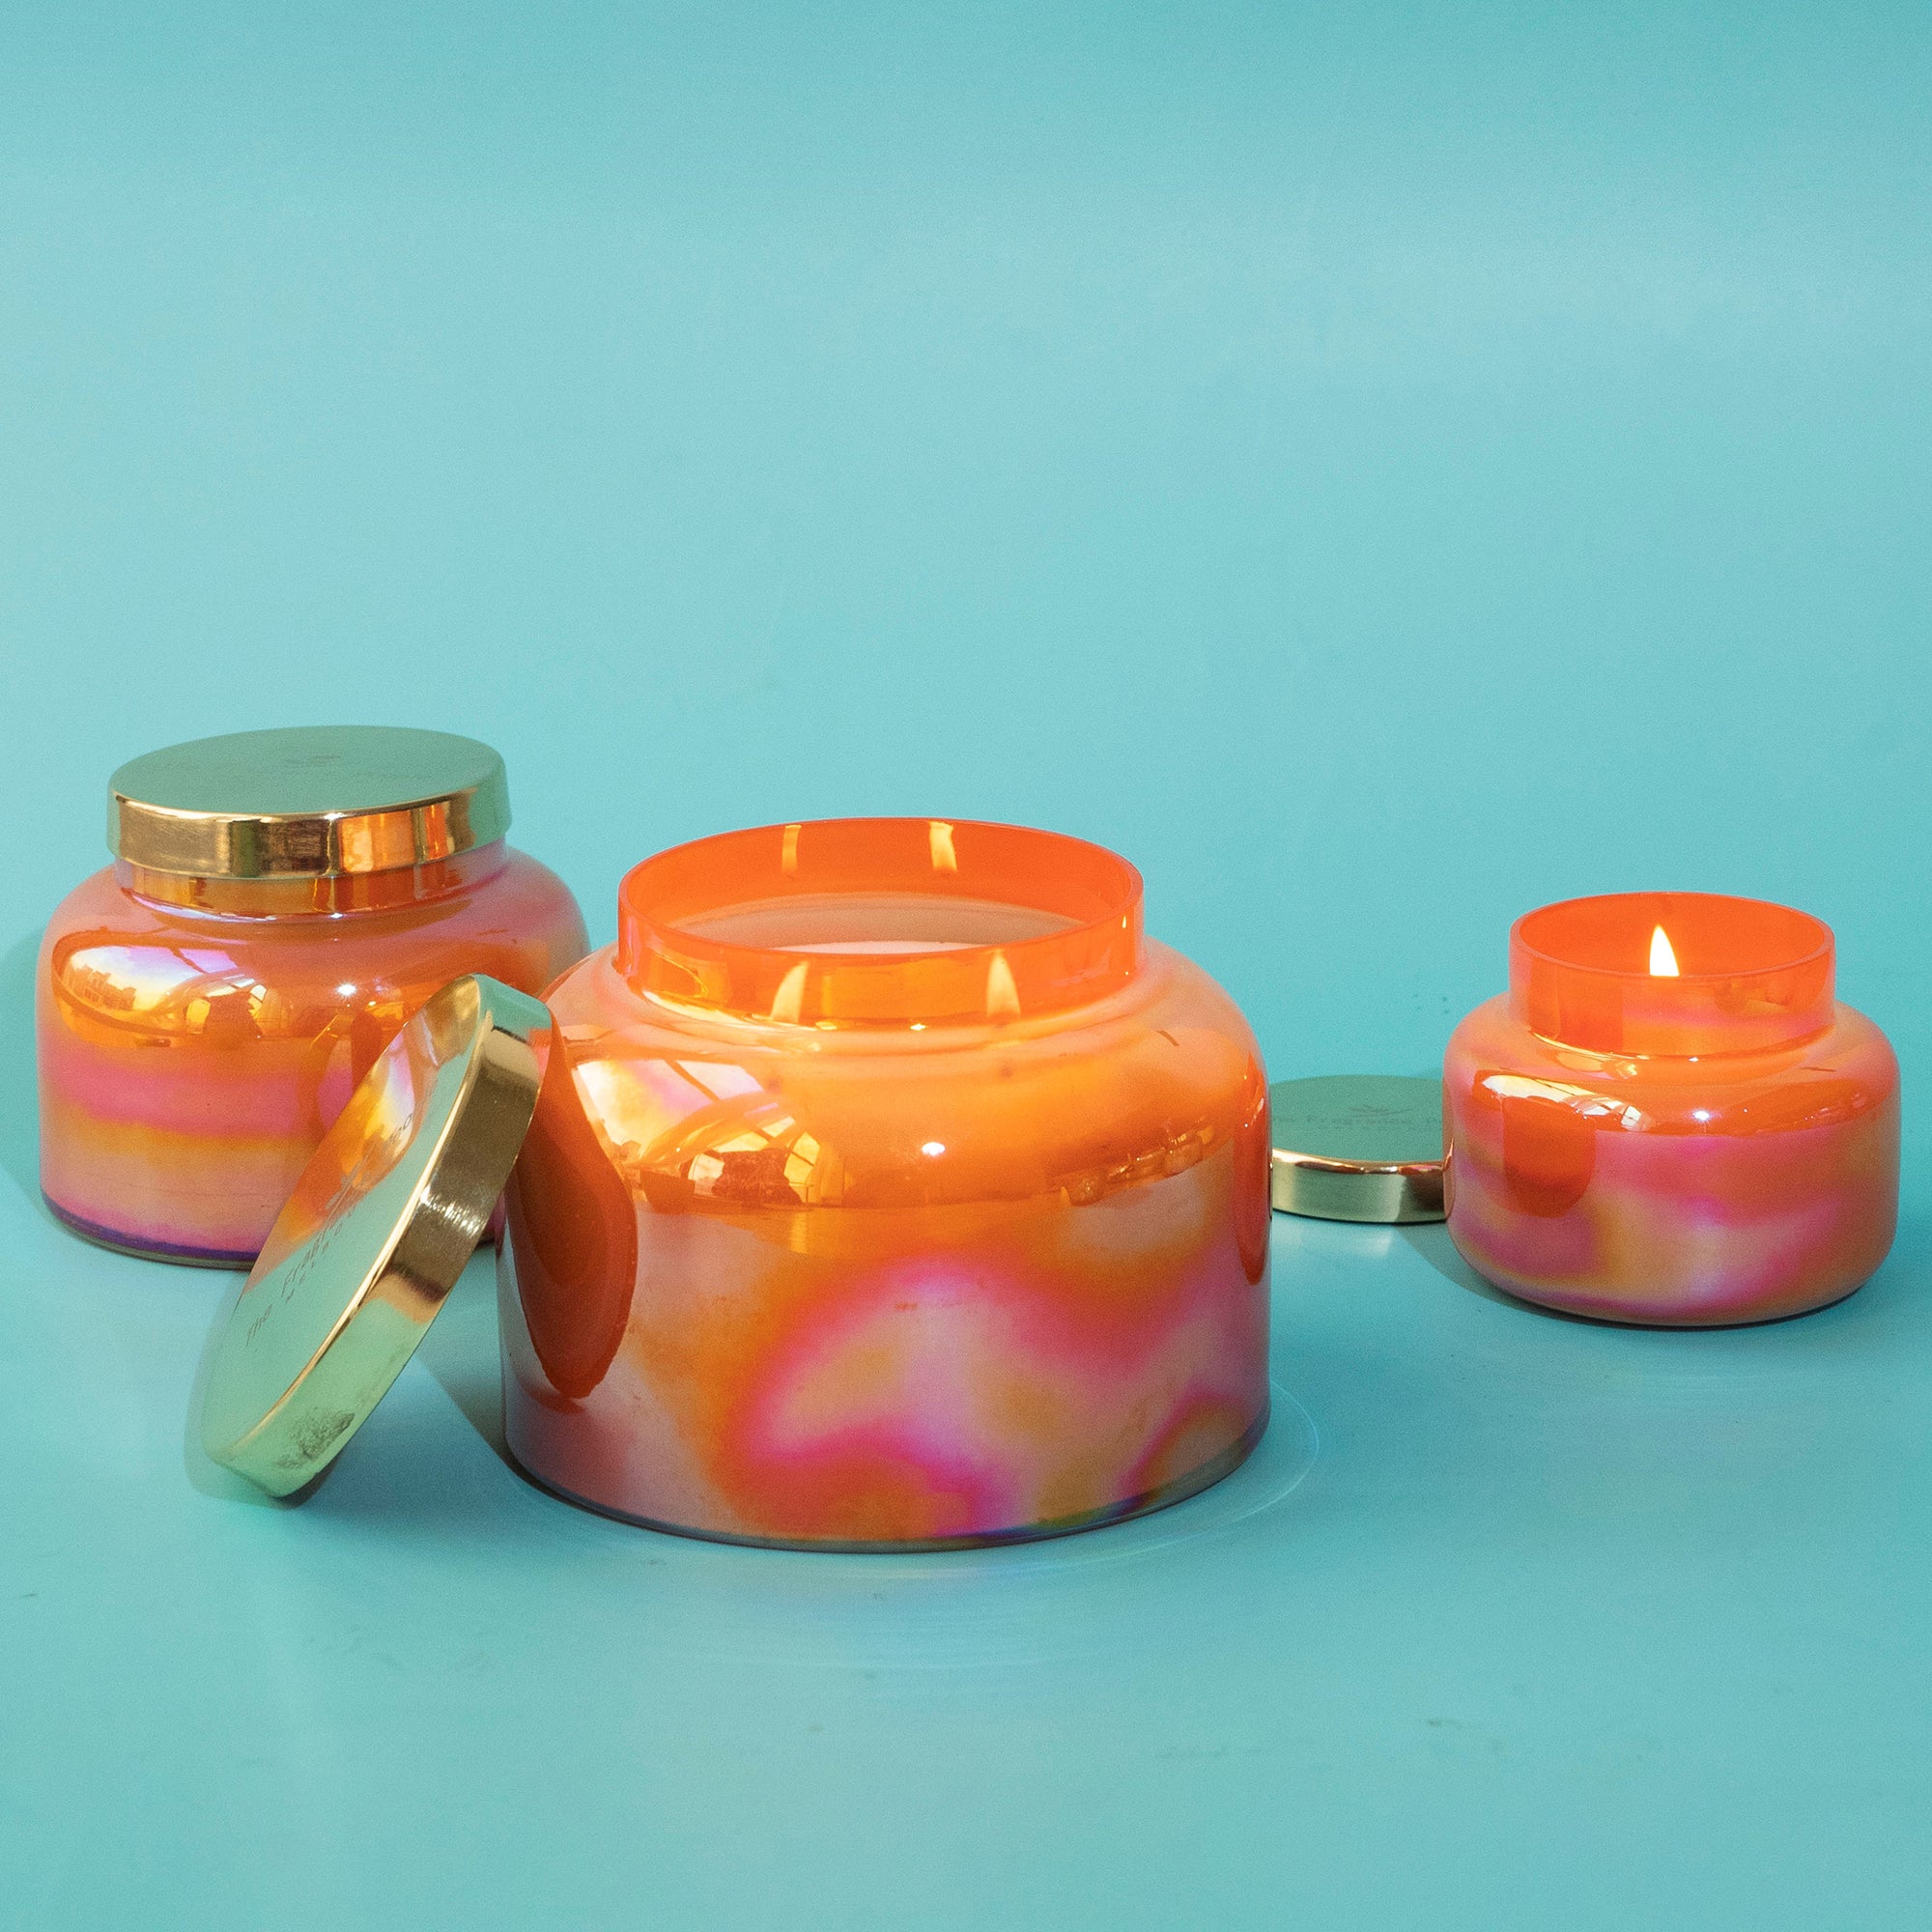 Lustre Glass Candle - Neroli